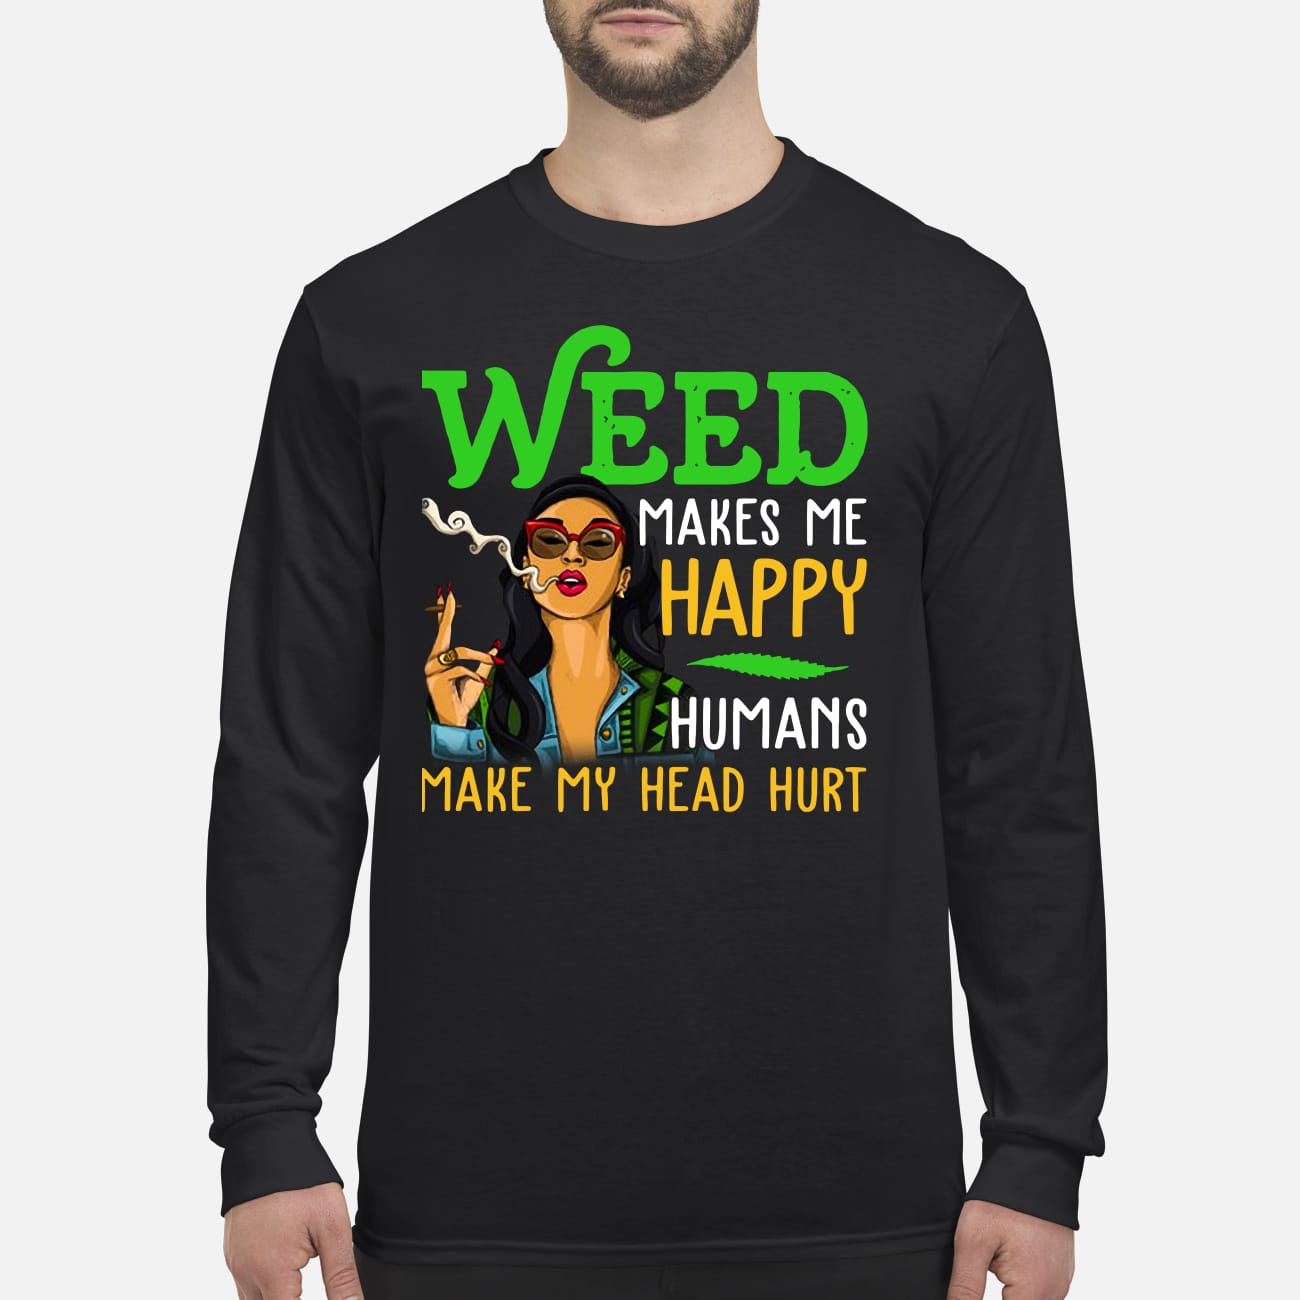 Weed makes me happy humans make my head hurt men's long sleeved shirt